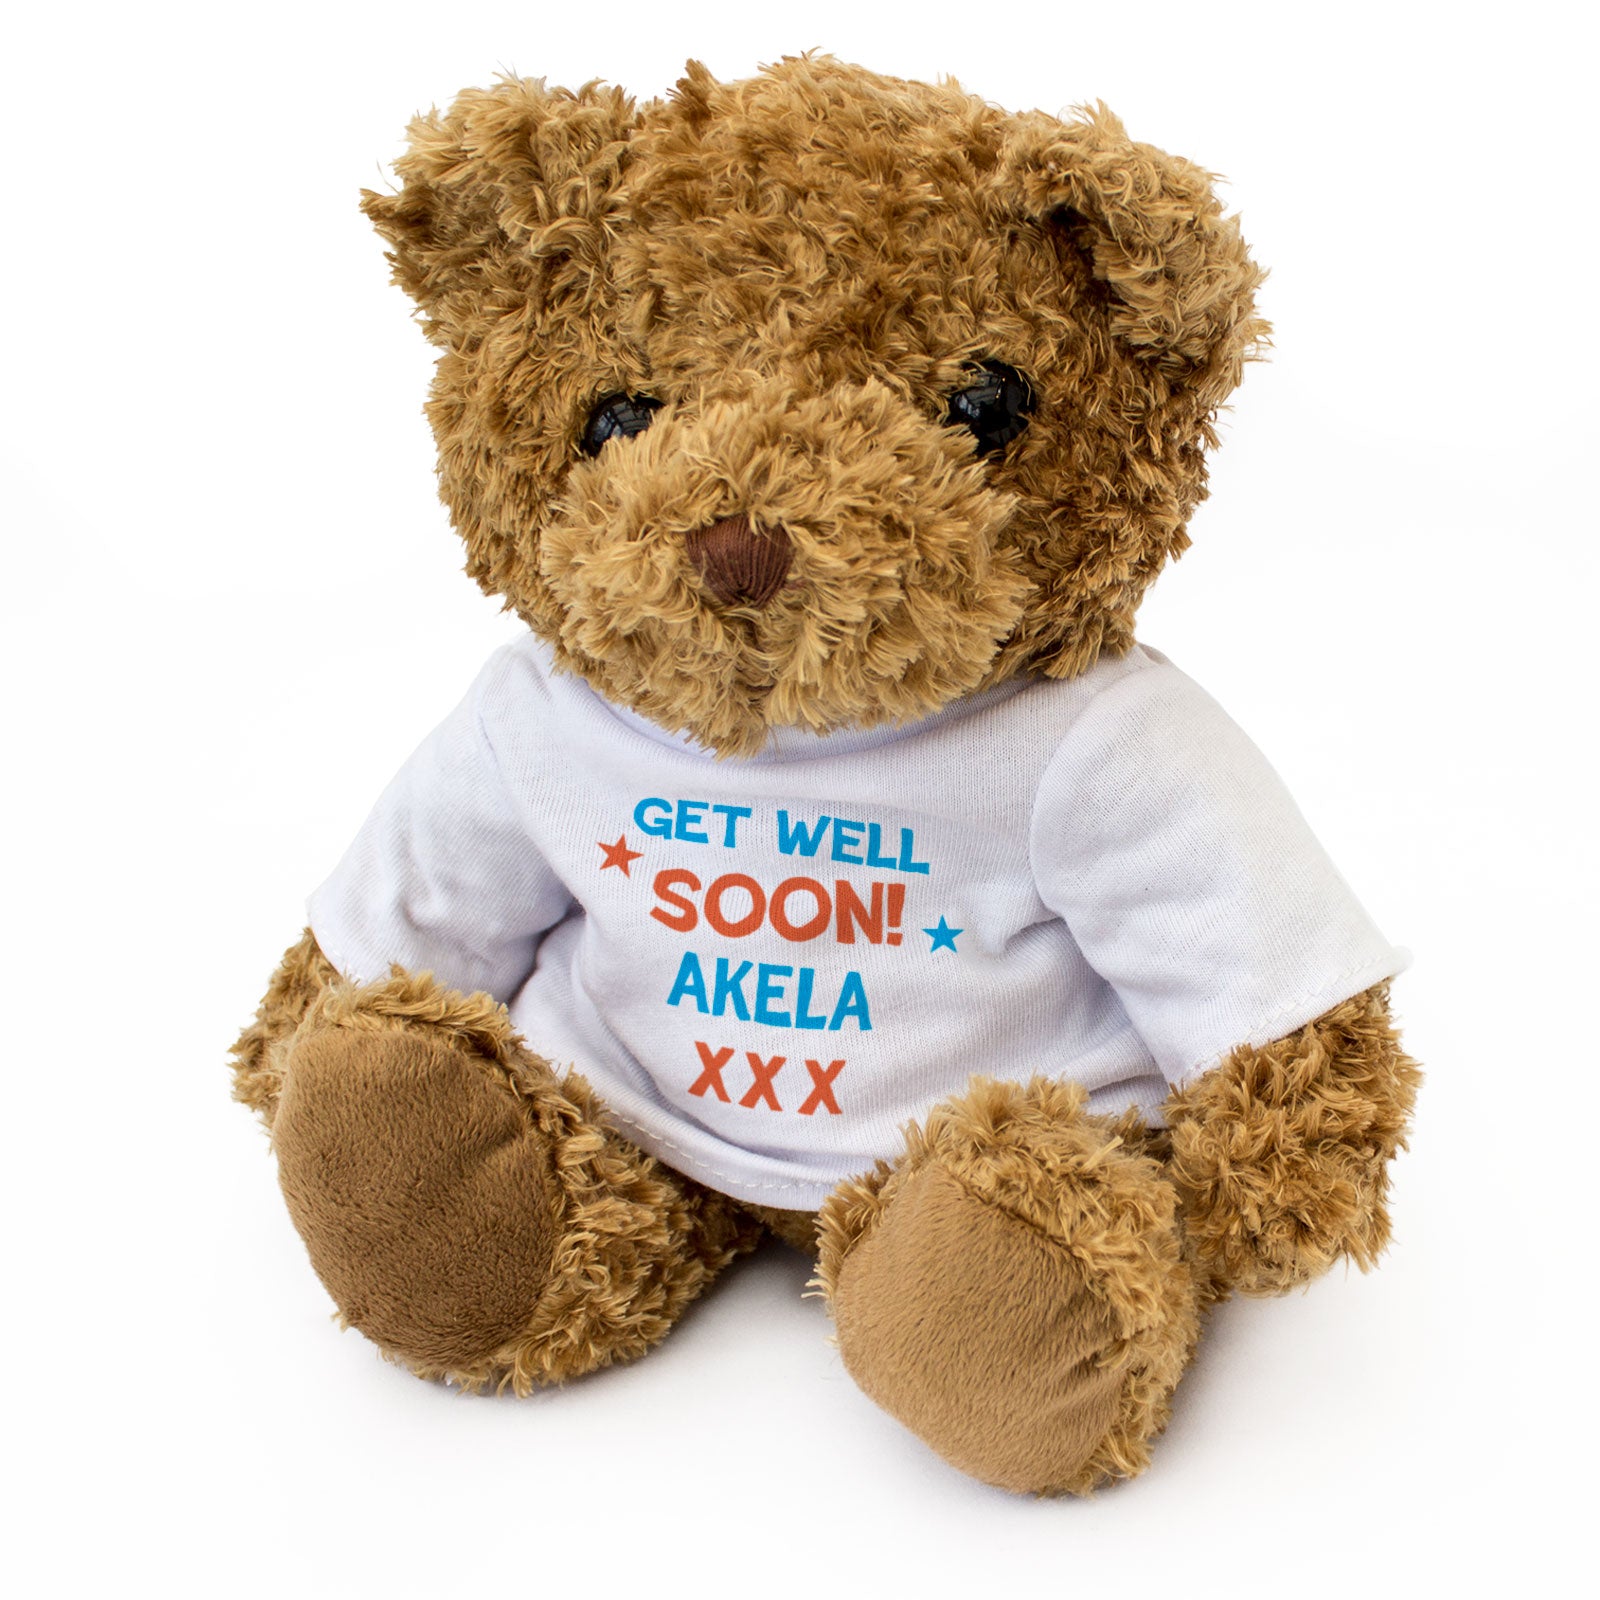 Get Well Soon Akela - Teddy Bear